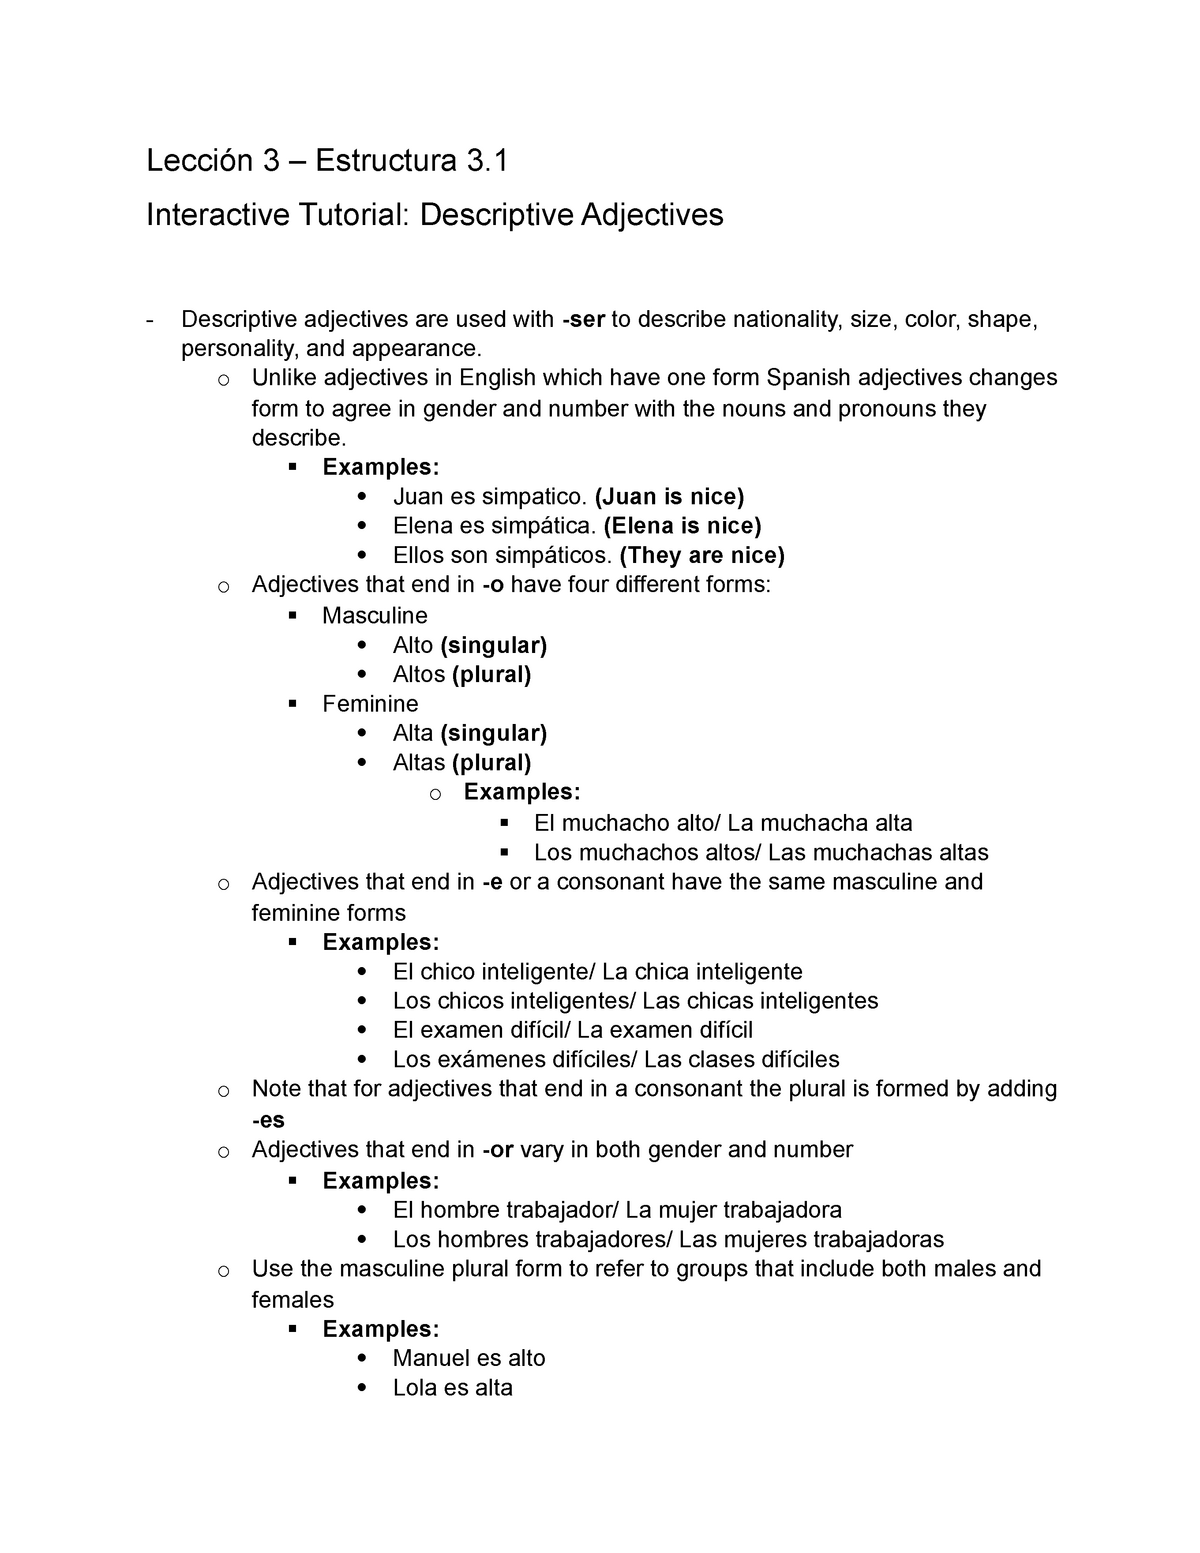 Lecci n 3 Estructura 3 1 Tutorial Notes On Descriptive Adjectives